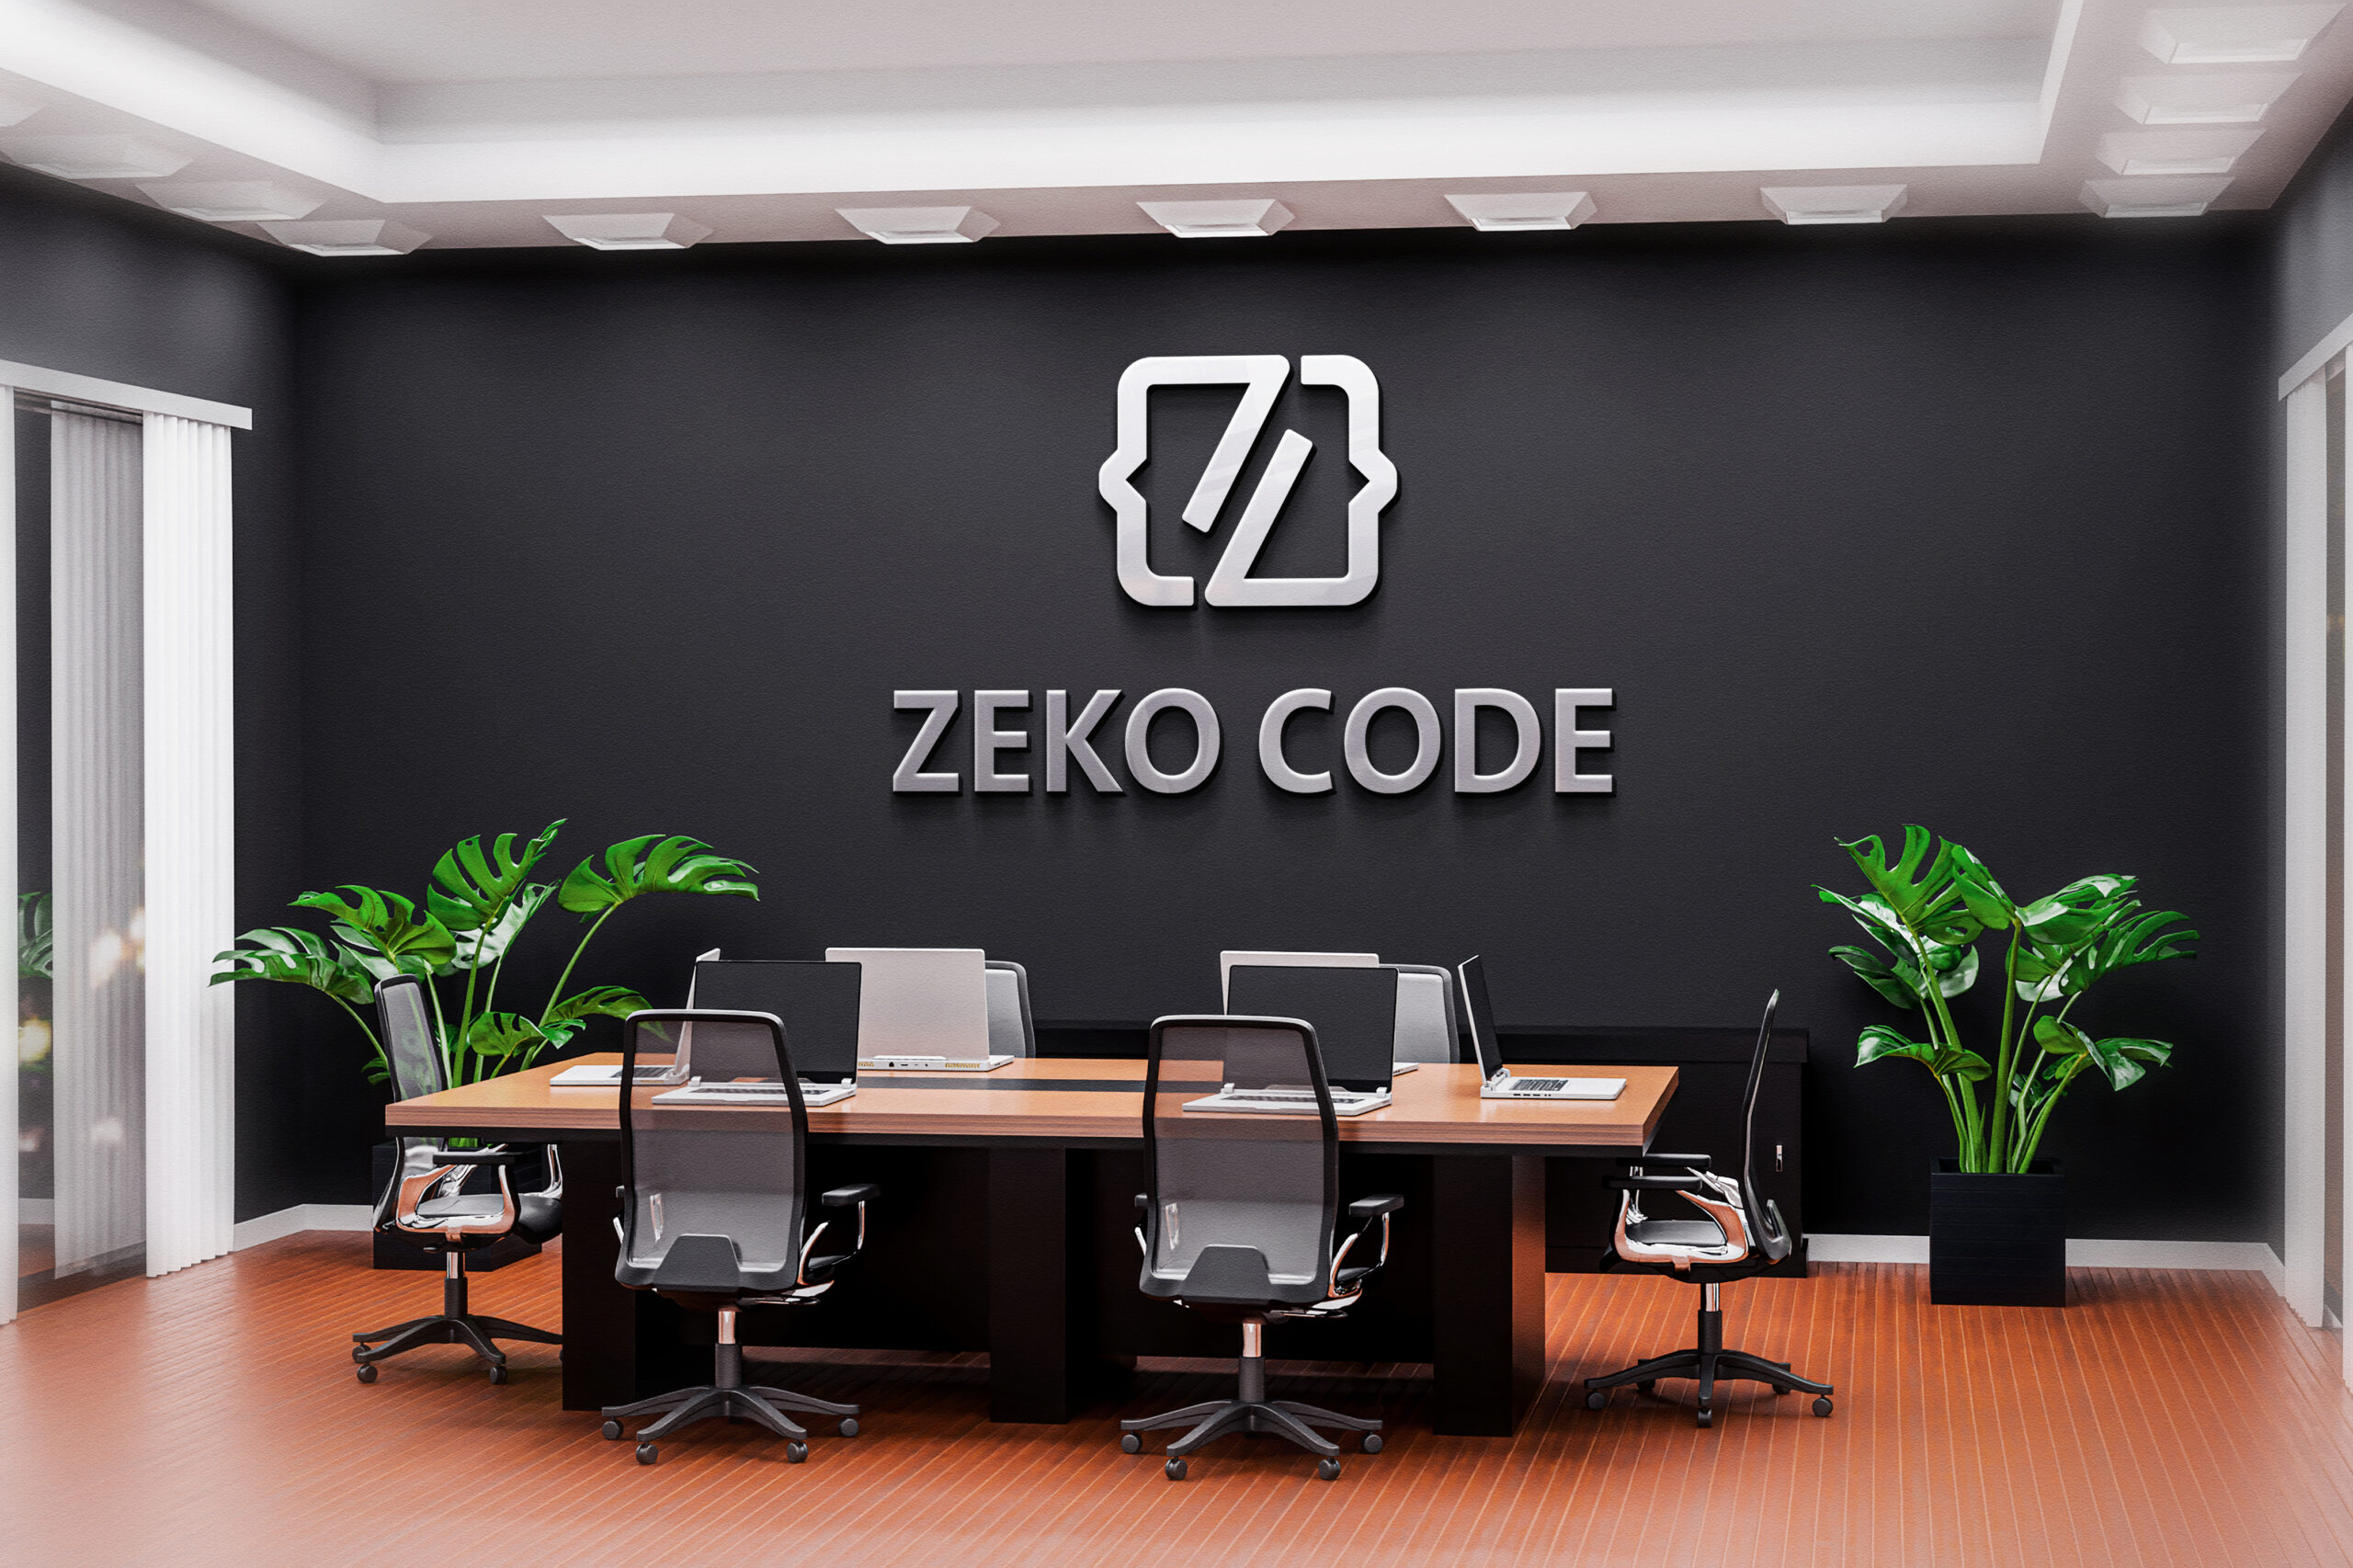 Zeko Code